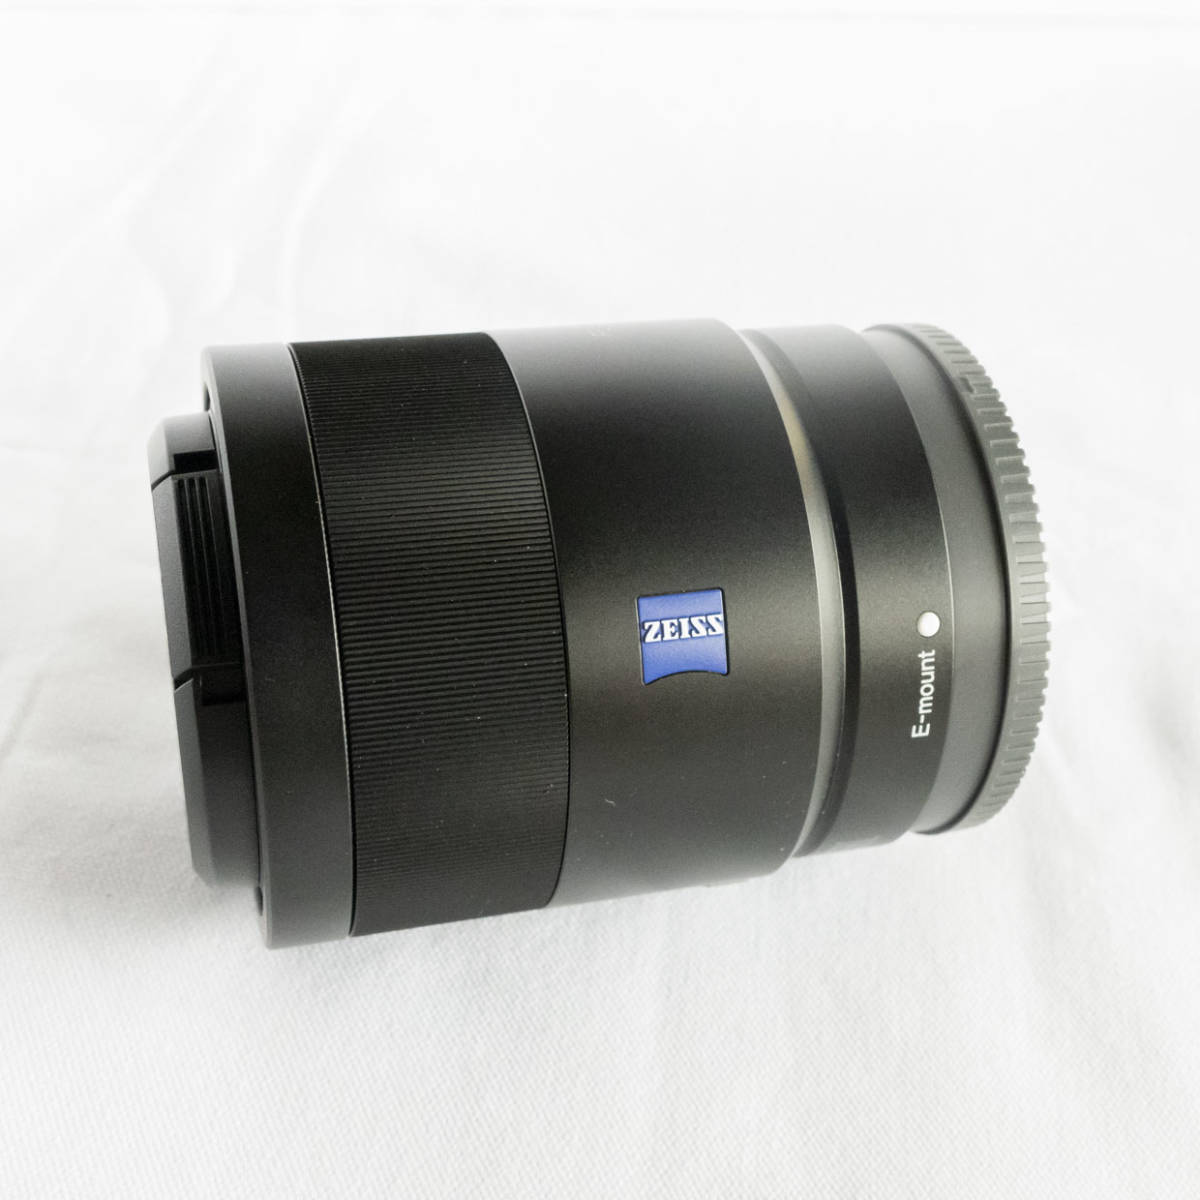  Sony lens Carl Zeiss Sonnar FE 1.8 55mm ZA ZEISS SONY